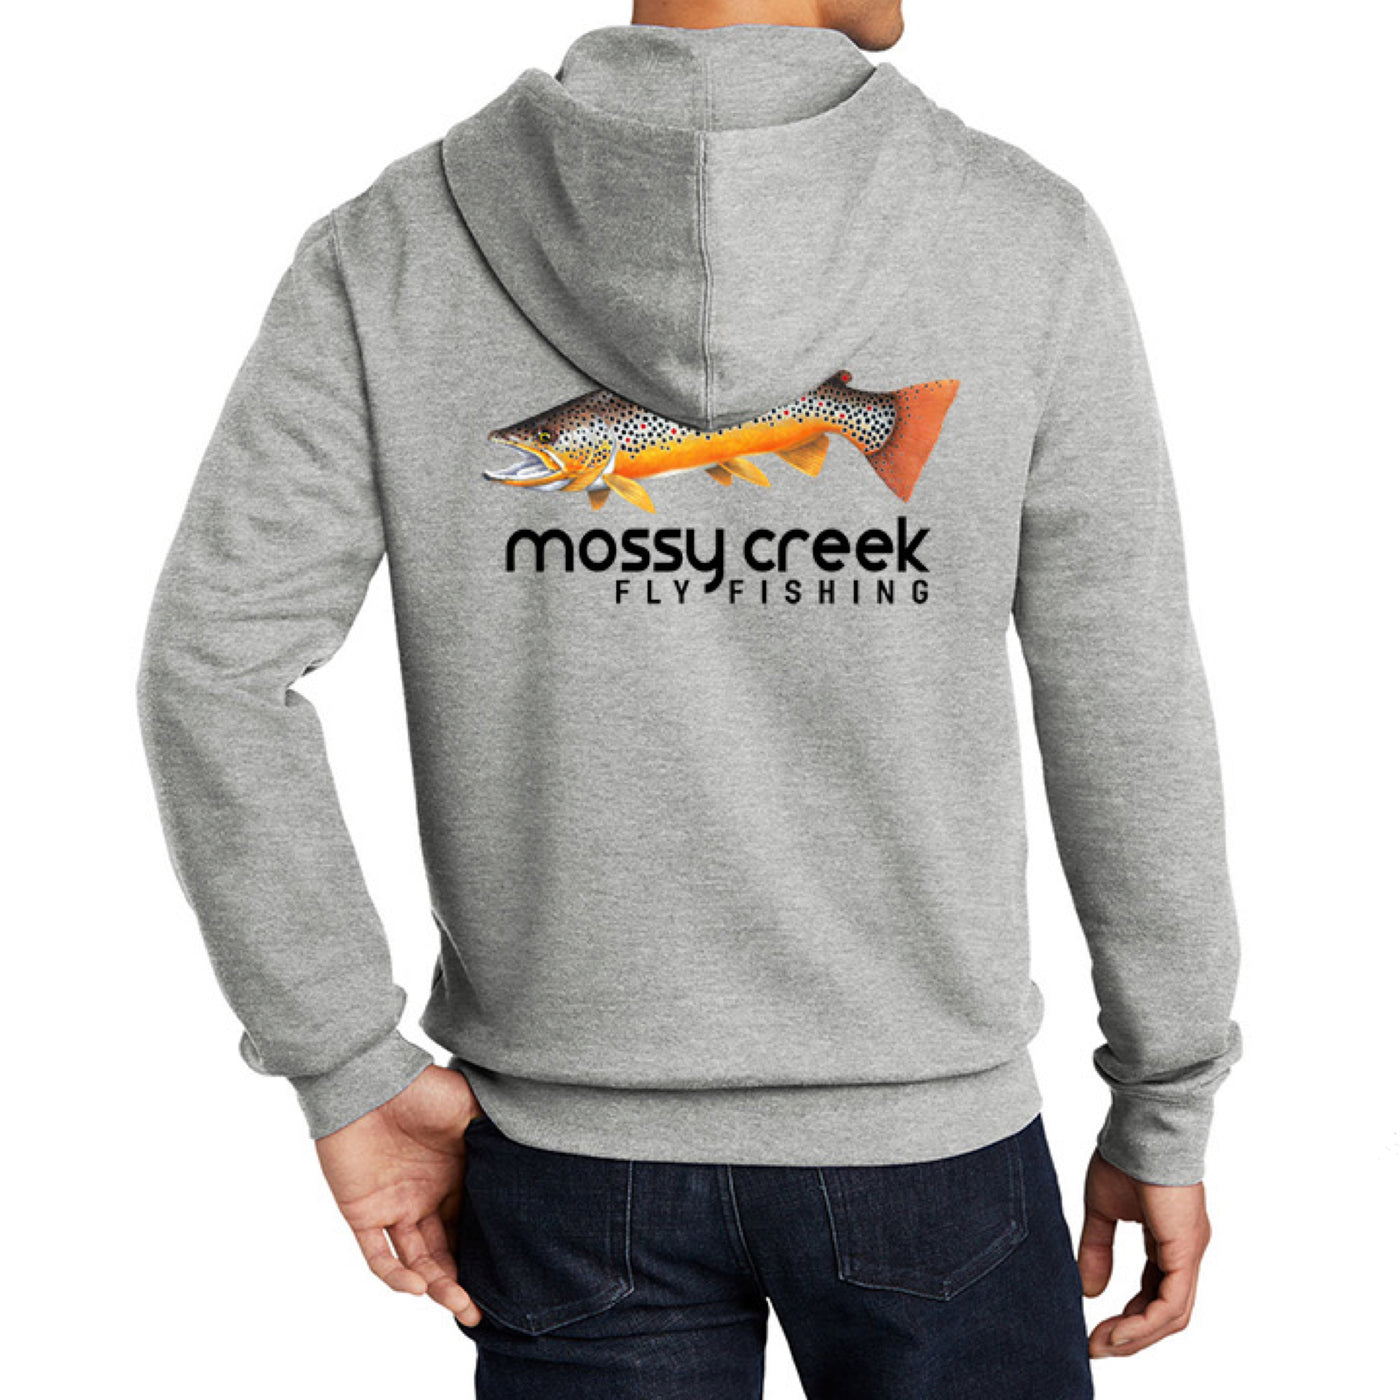 New Mossy Creek Zip Hoody Light Heather Grey XL